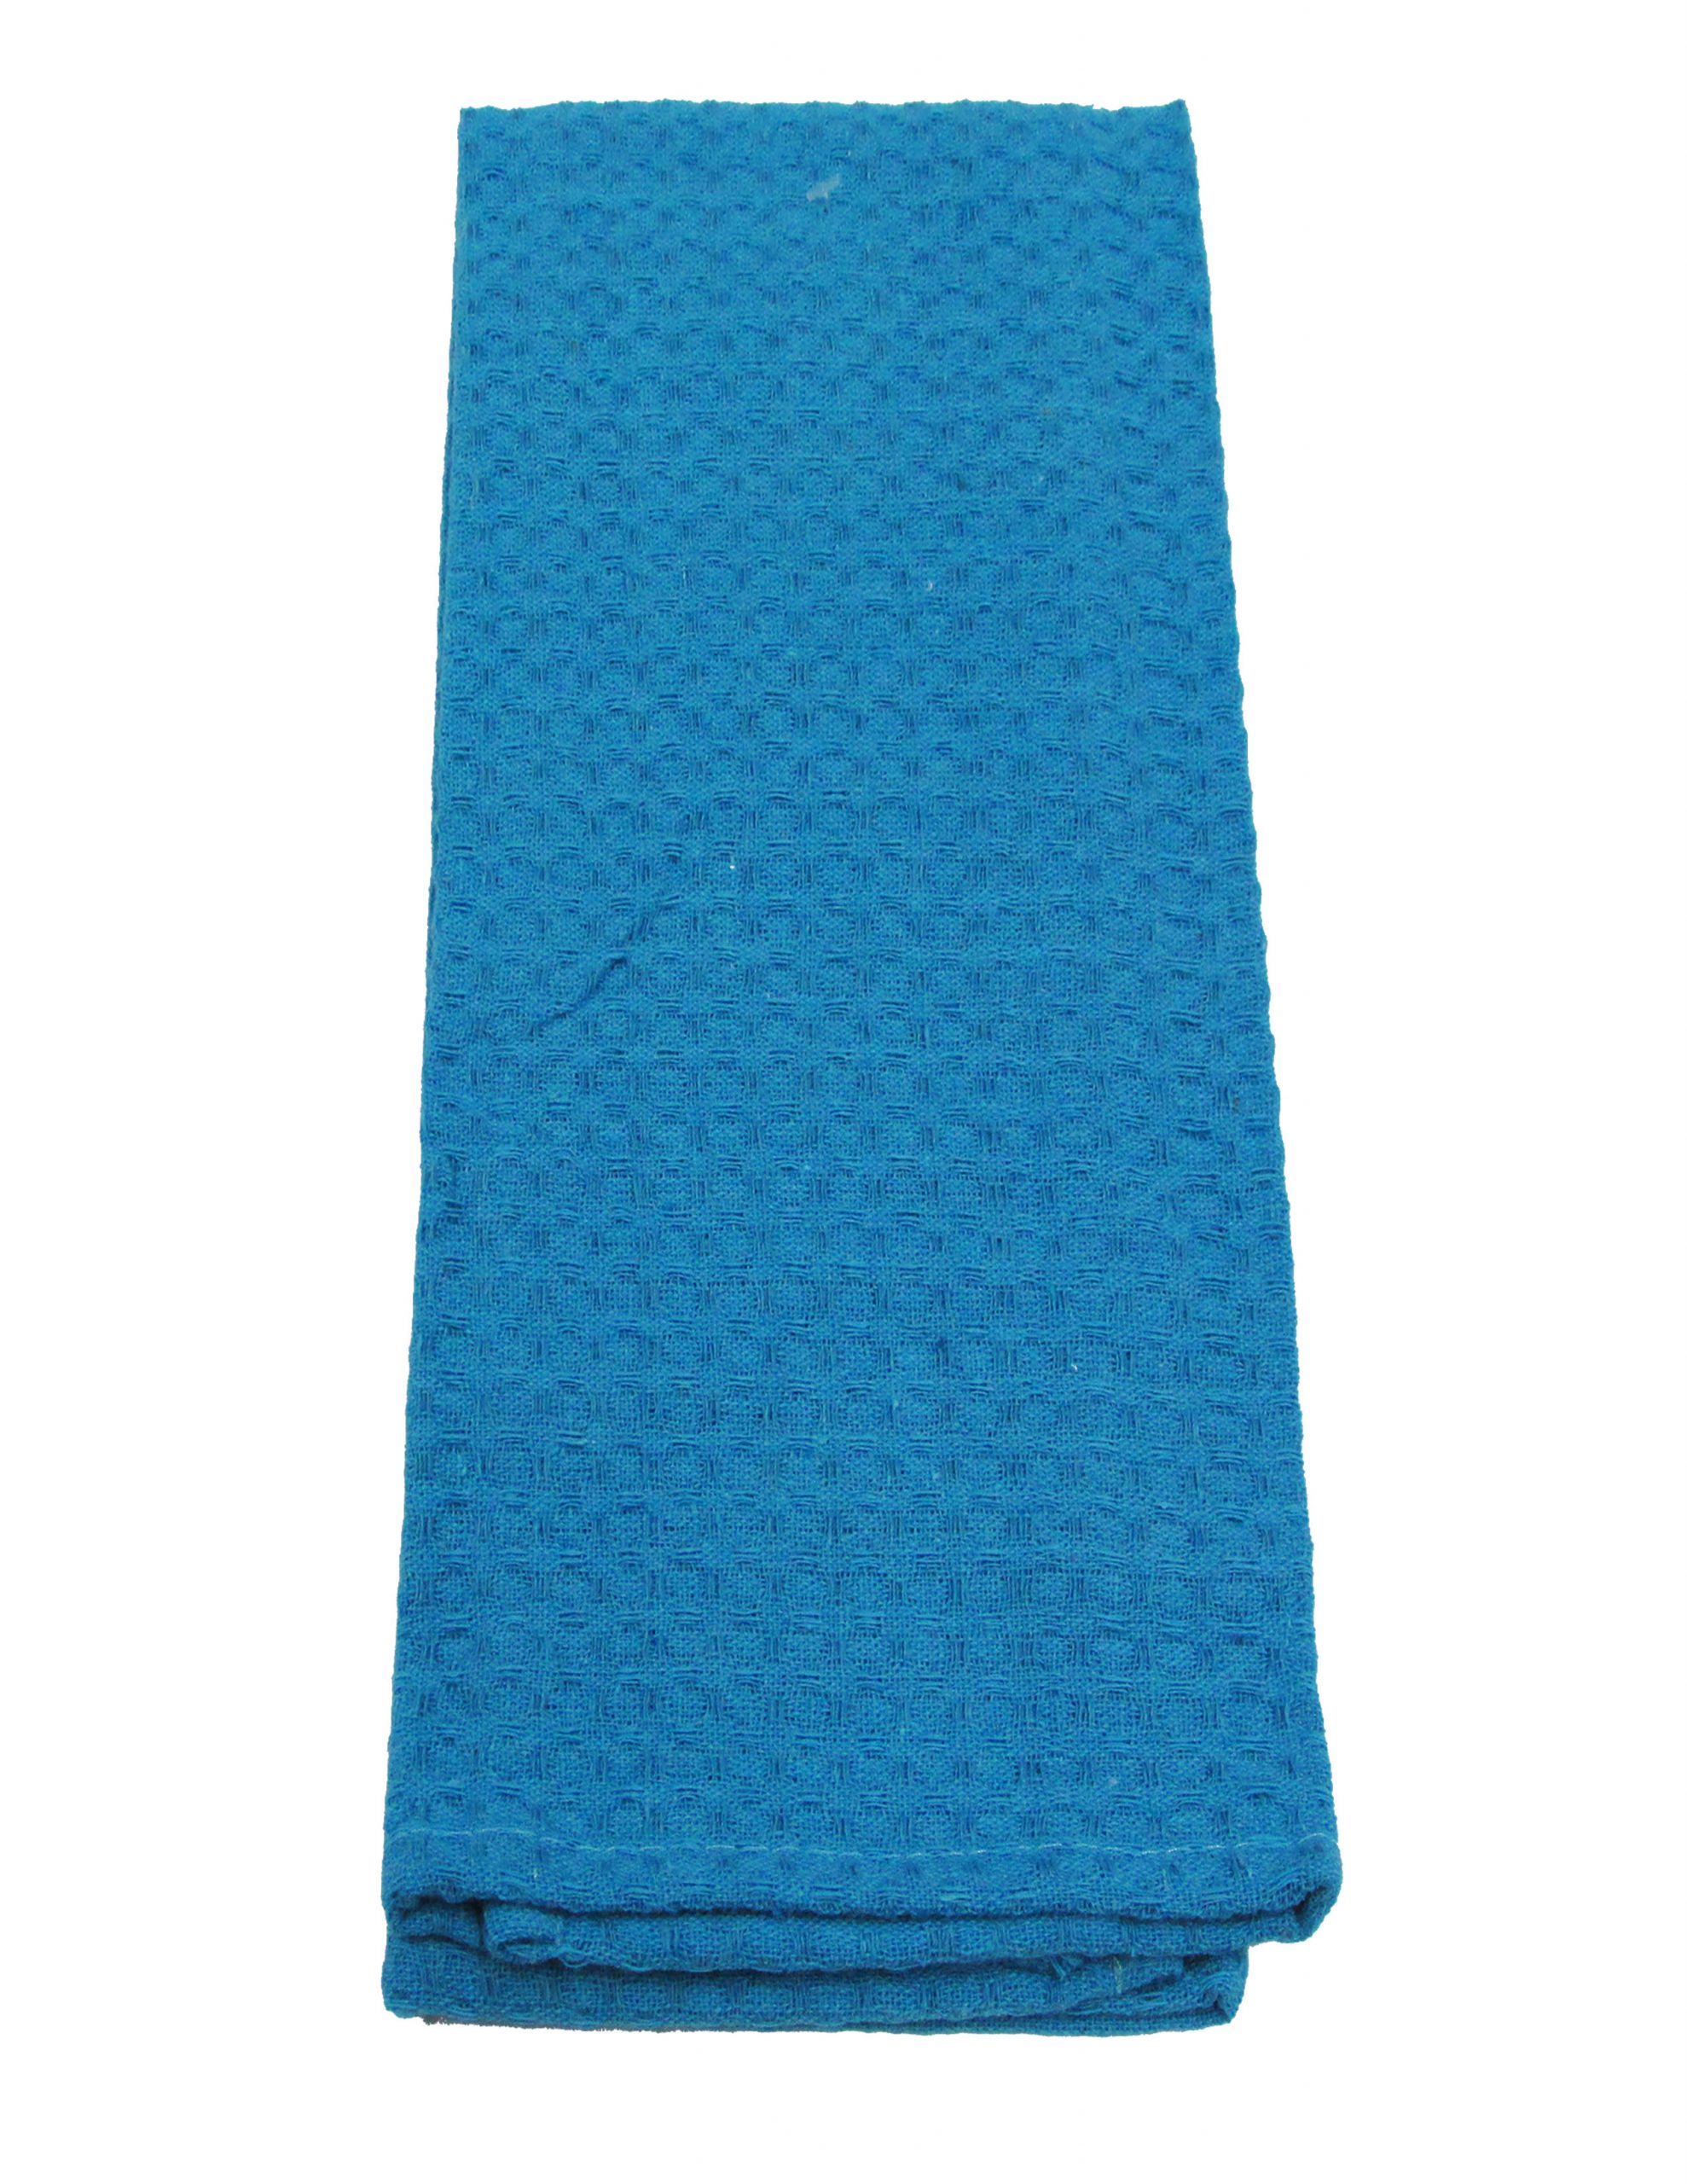 Aqua Blue Kitchen Towels, 2-Pack